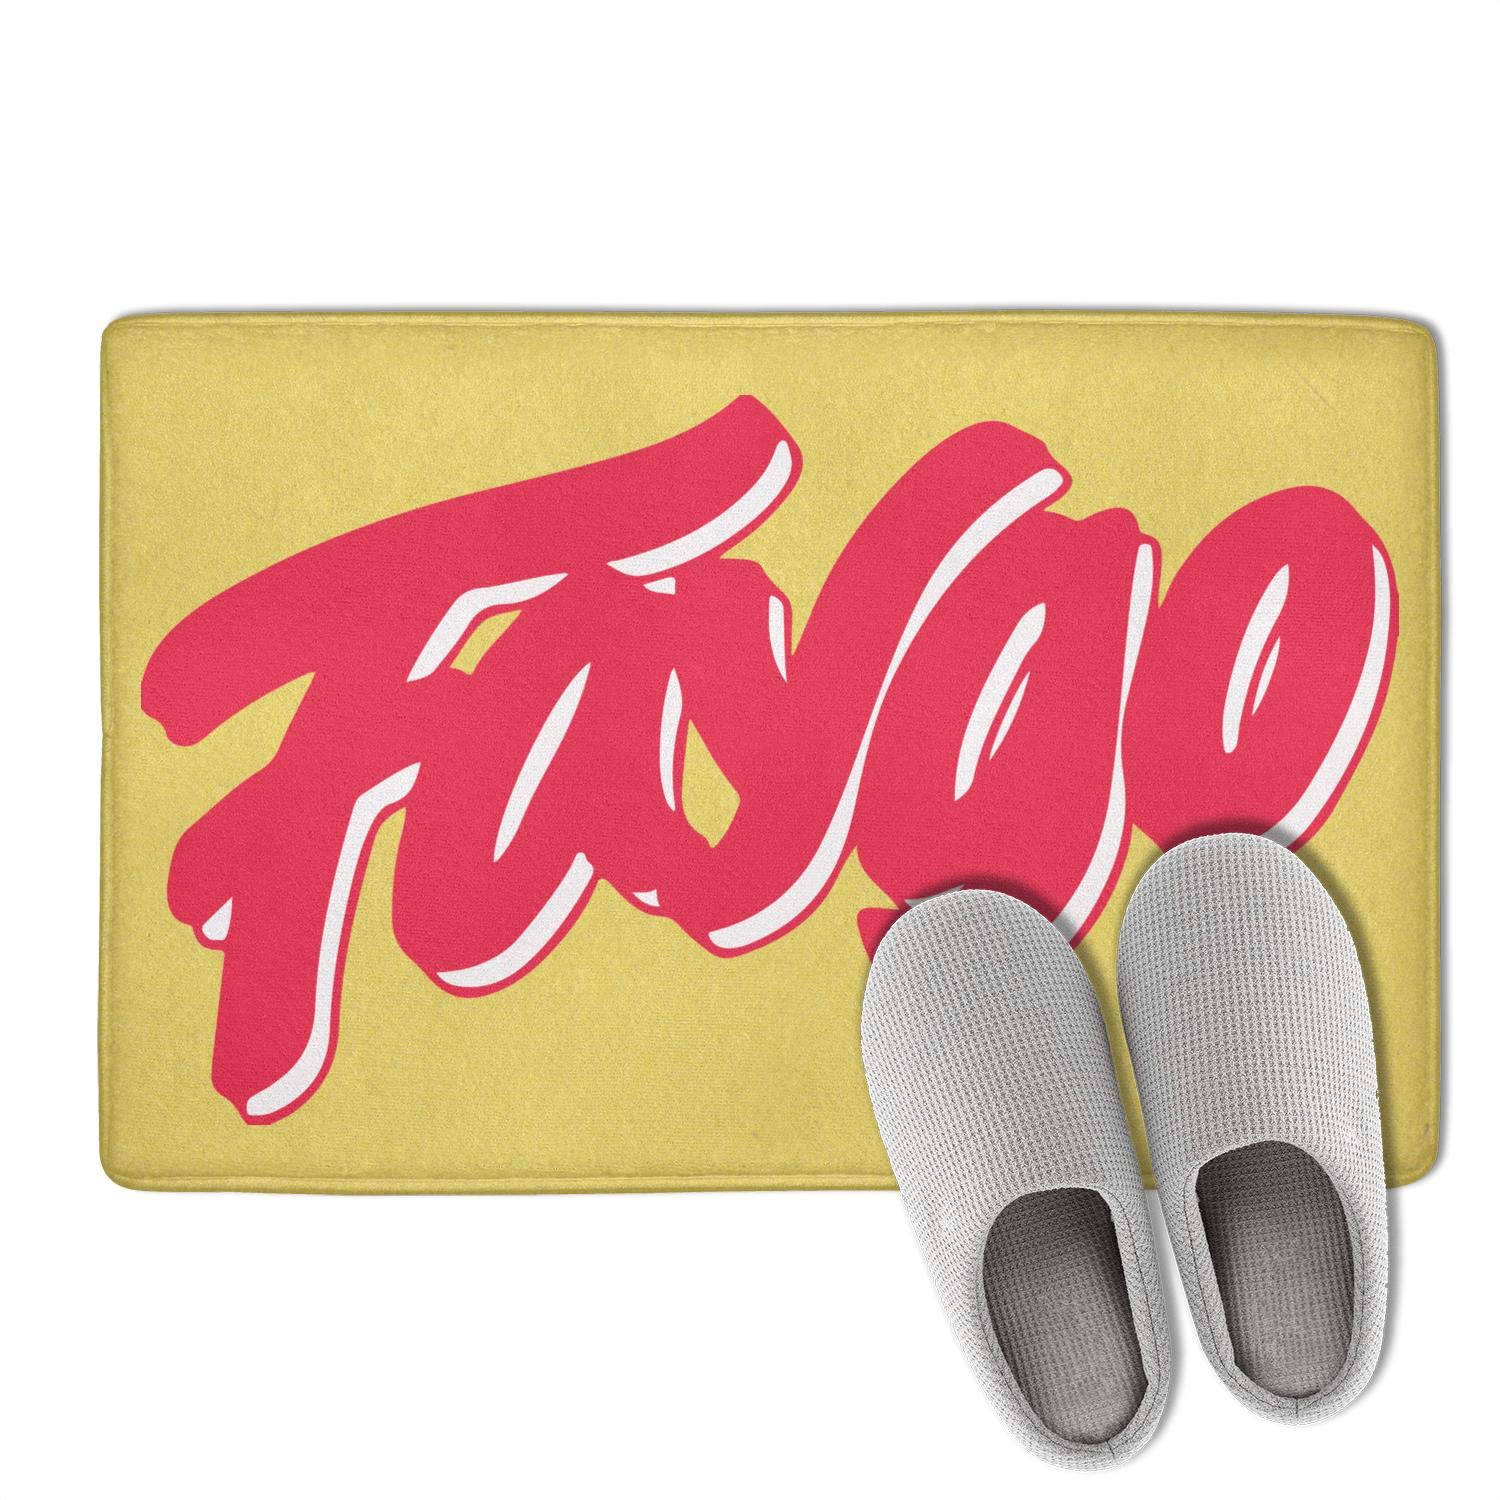 Faygo Logo - Amazon.com: jdfrrv dddd Indoor/Outdoor 31